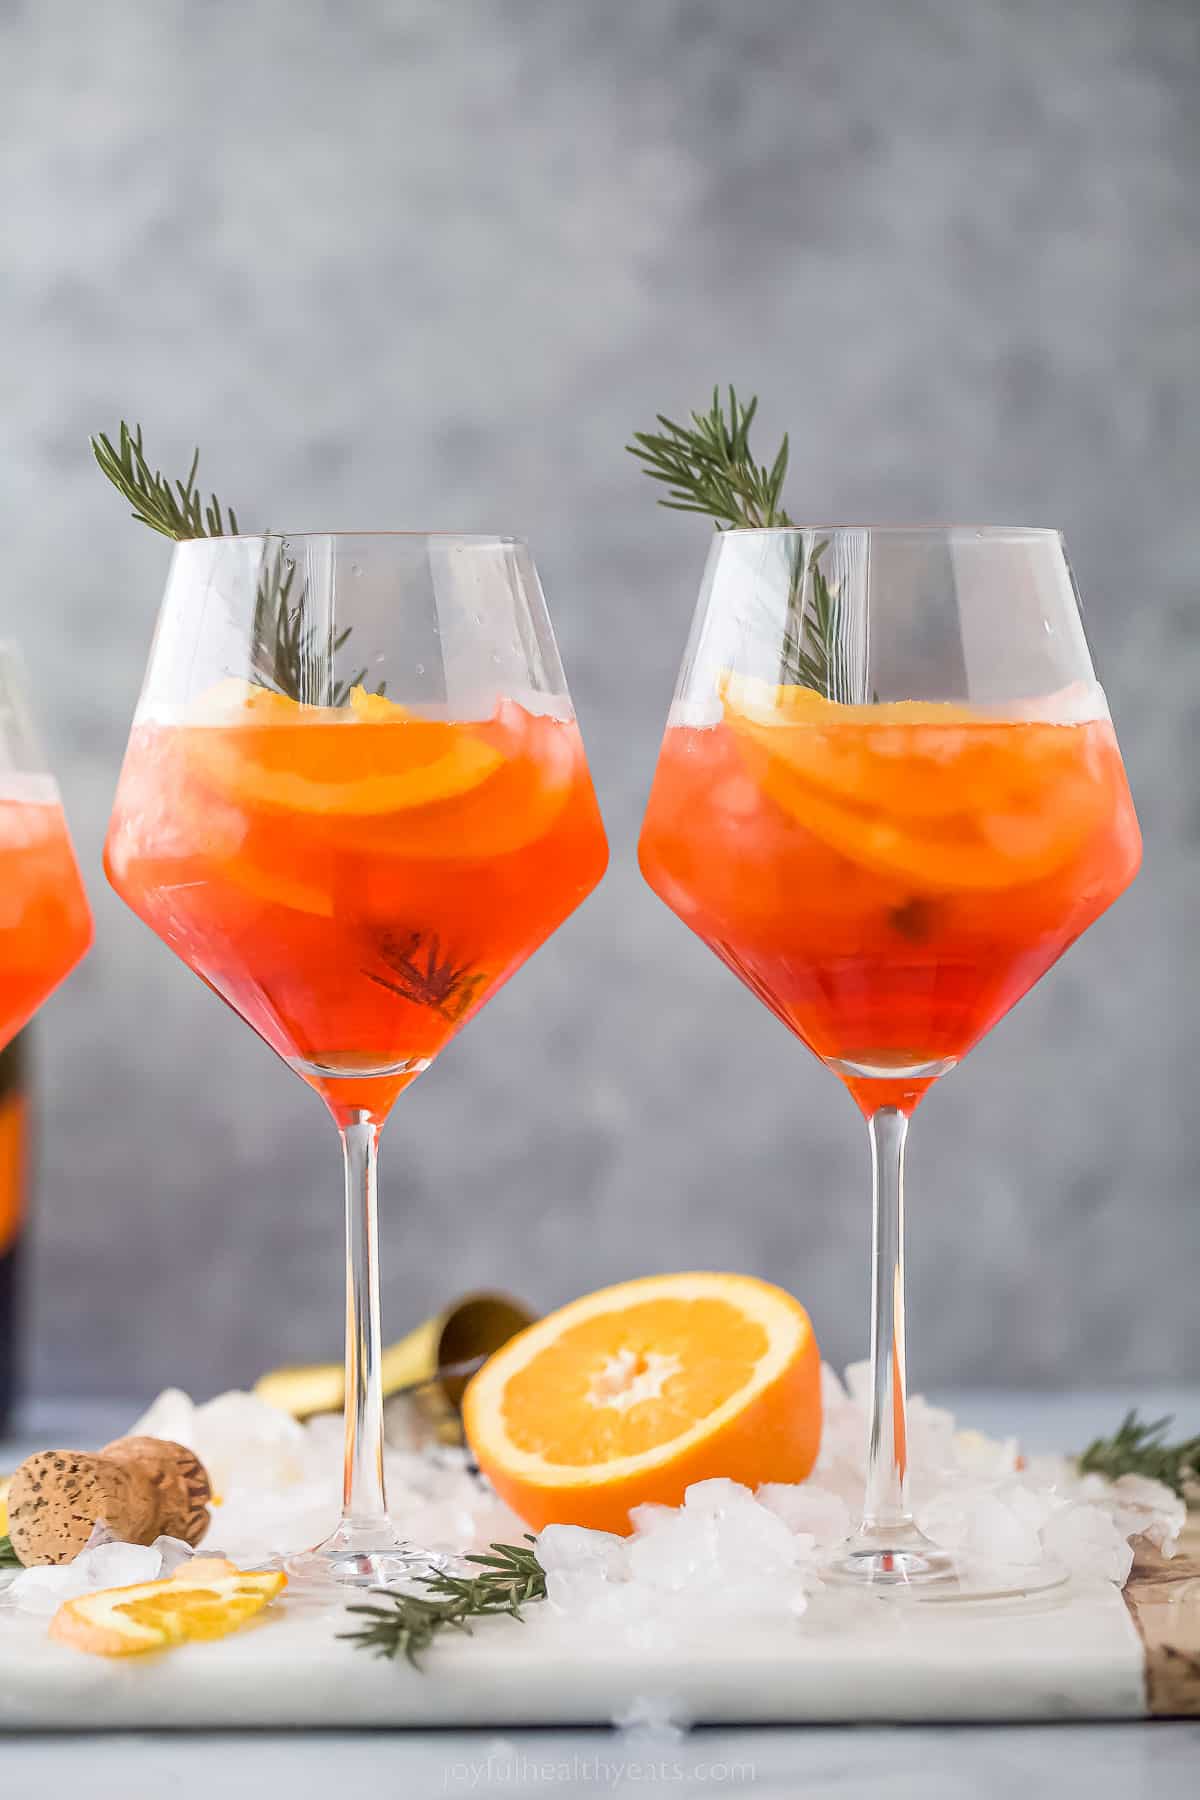 two holiday aperol spritz cocktails - a dark orange drink with orange slices and rosemary garnish